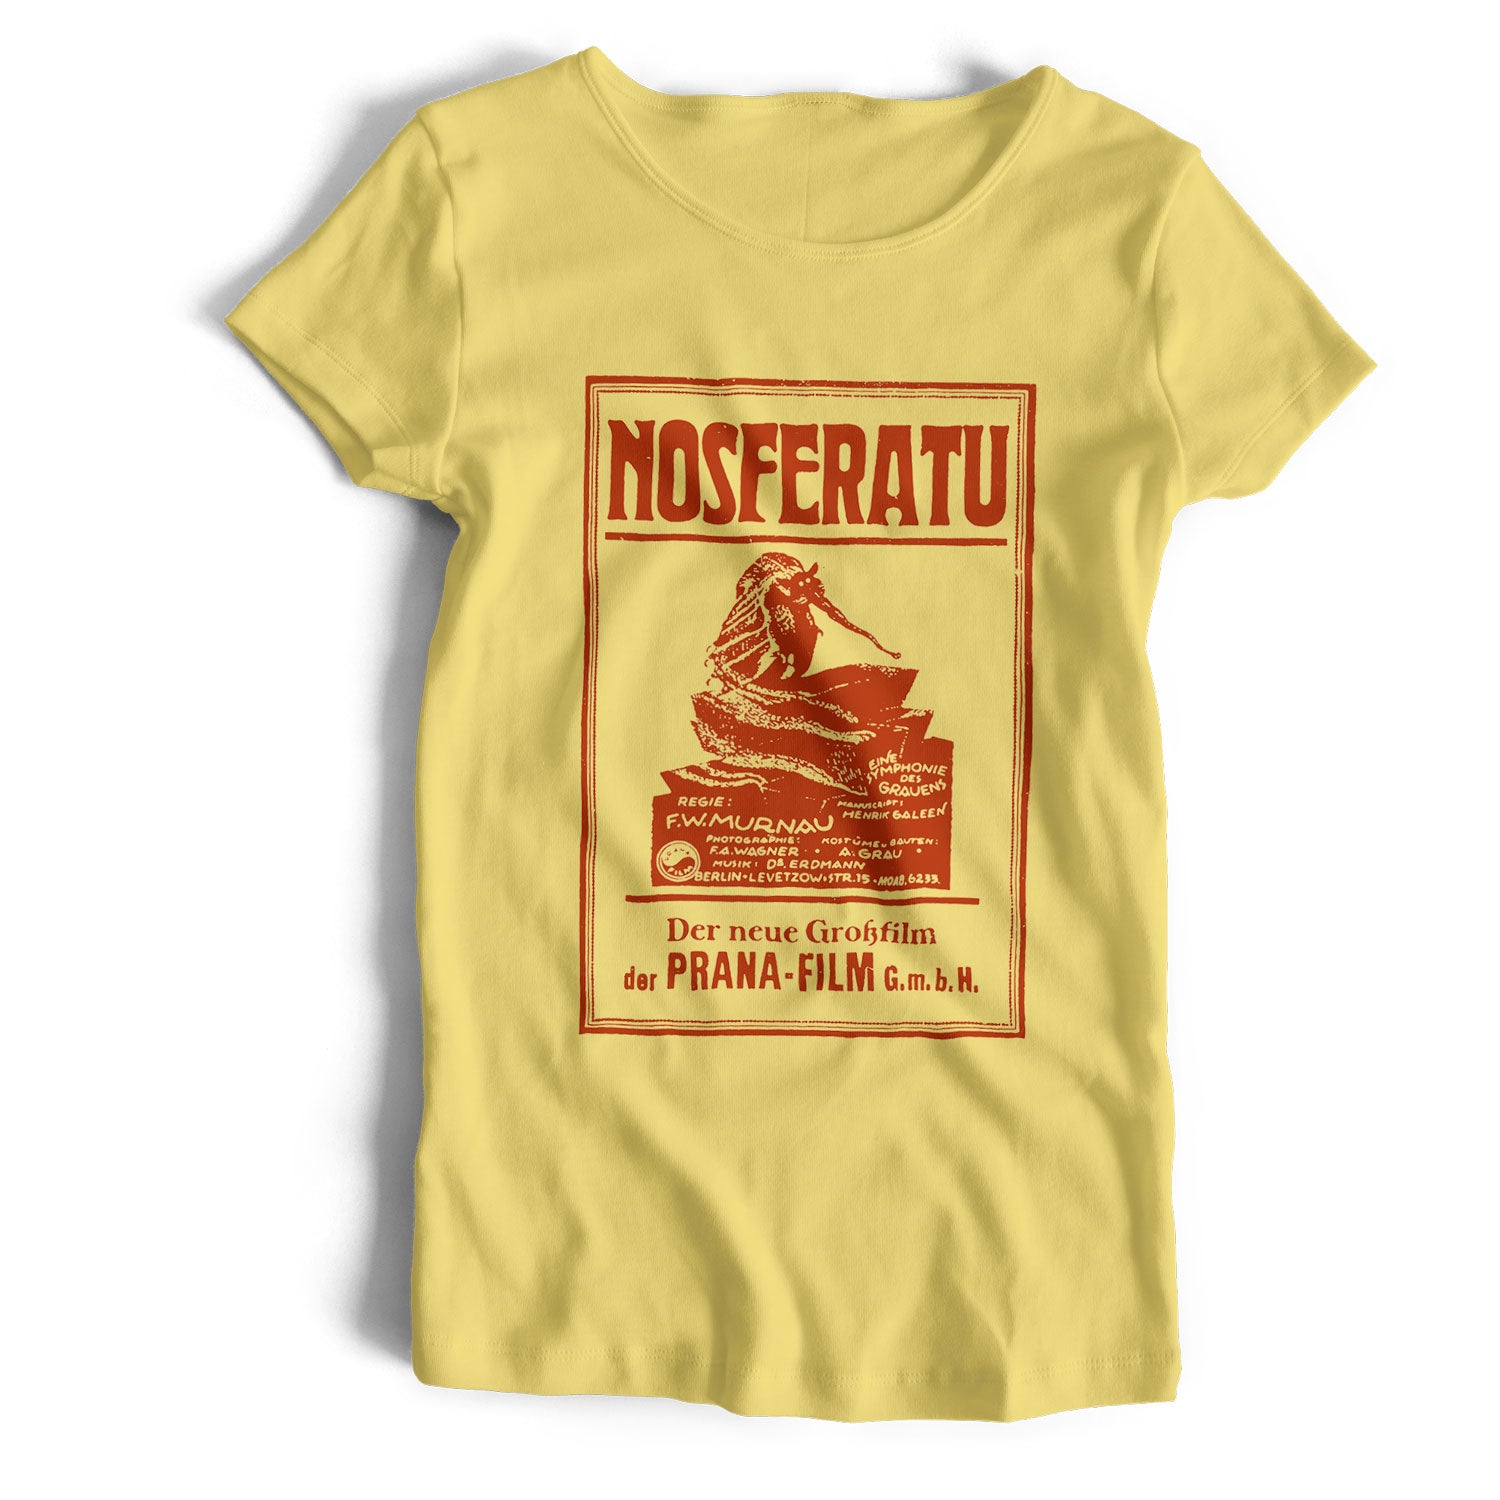 Nosferatu T Shirt - Classic Vintage Expressionist Movie Poster T Shirt Old Skool Hooligans